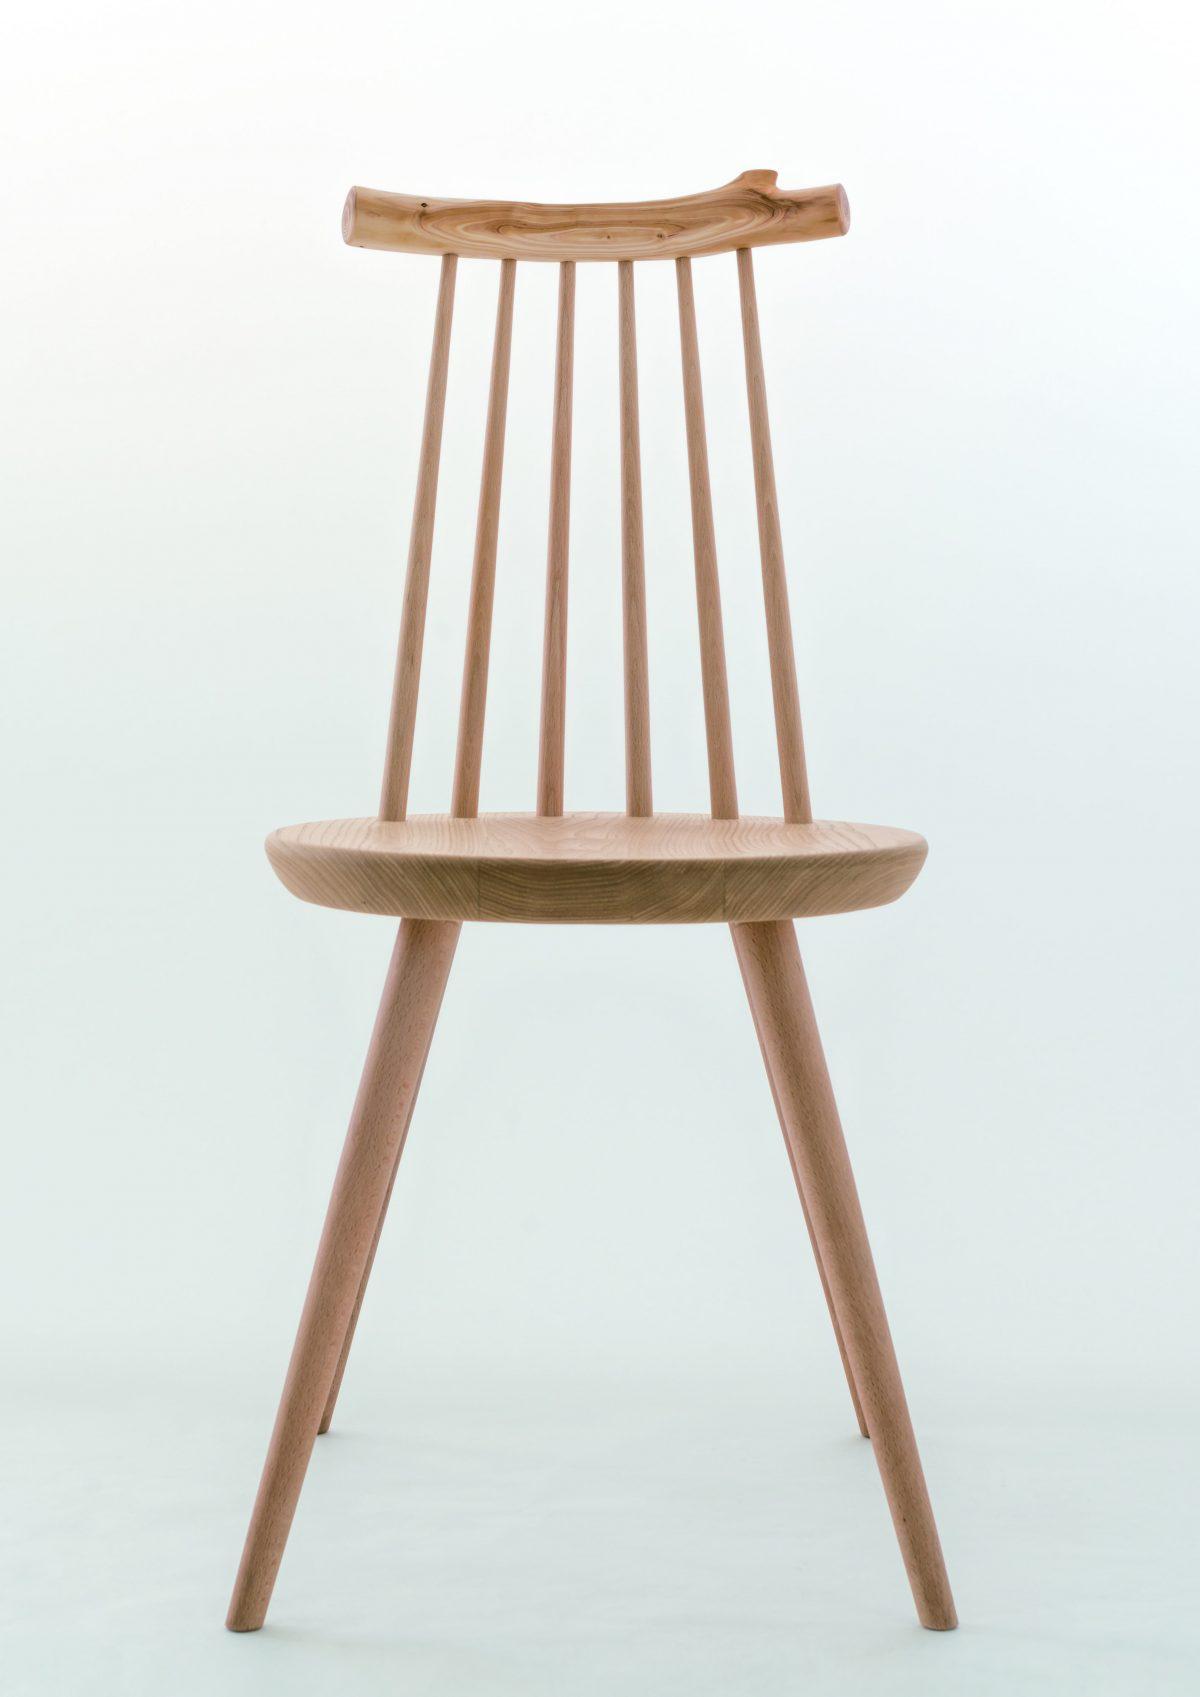 The Kinoe chair, designed by Ibuki Kaiyama. (Hida Sangyo)